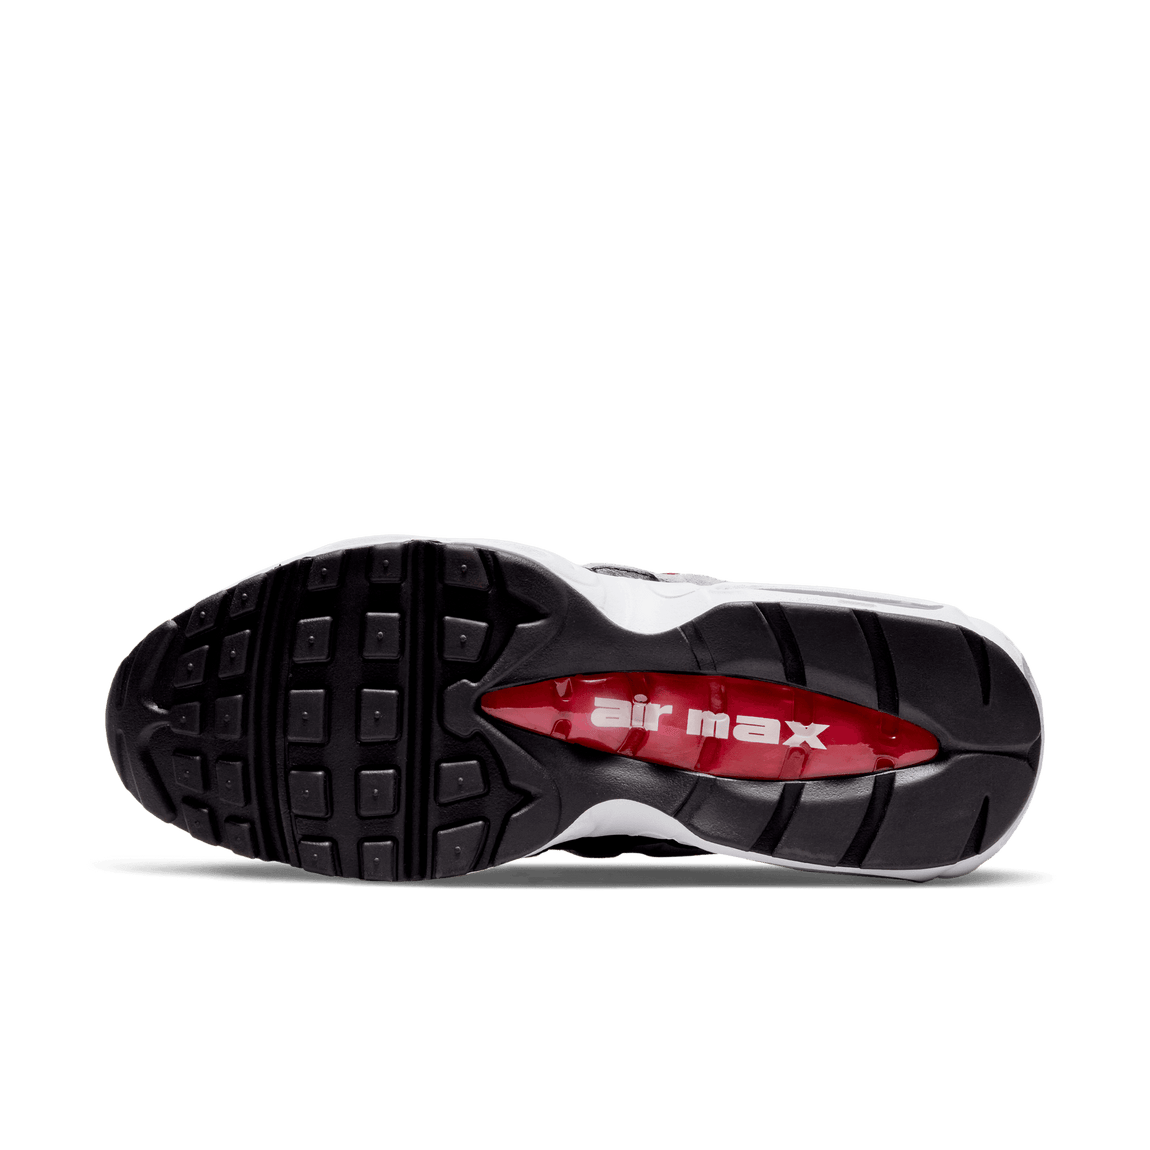 Nike Air Max 95 ES (Black/White-Varsity Red-Particle Grey) - Nike Air Max 95 ES (Black/White-Varsity Red-Particle Grey) - 